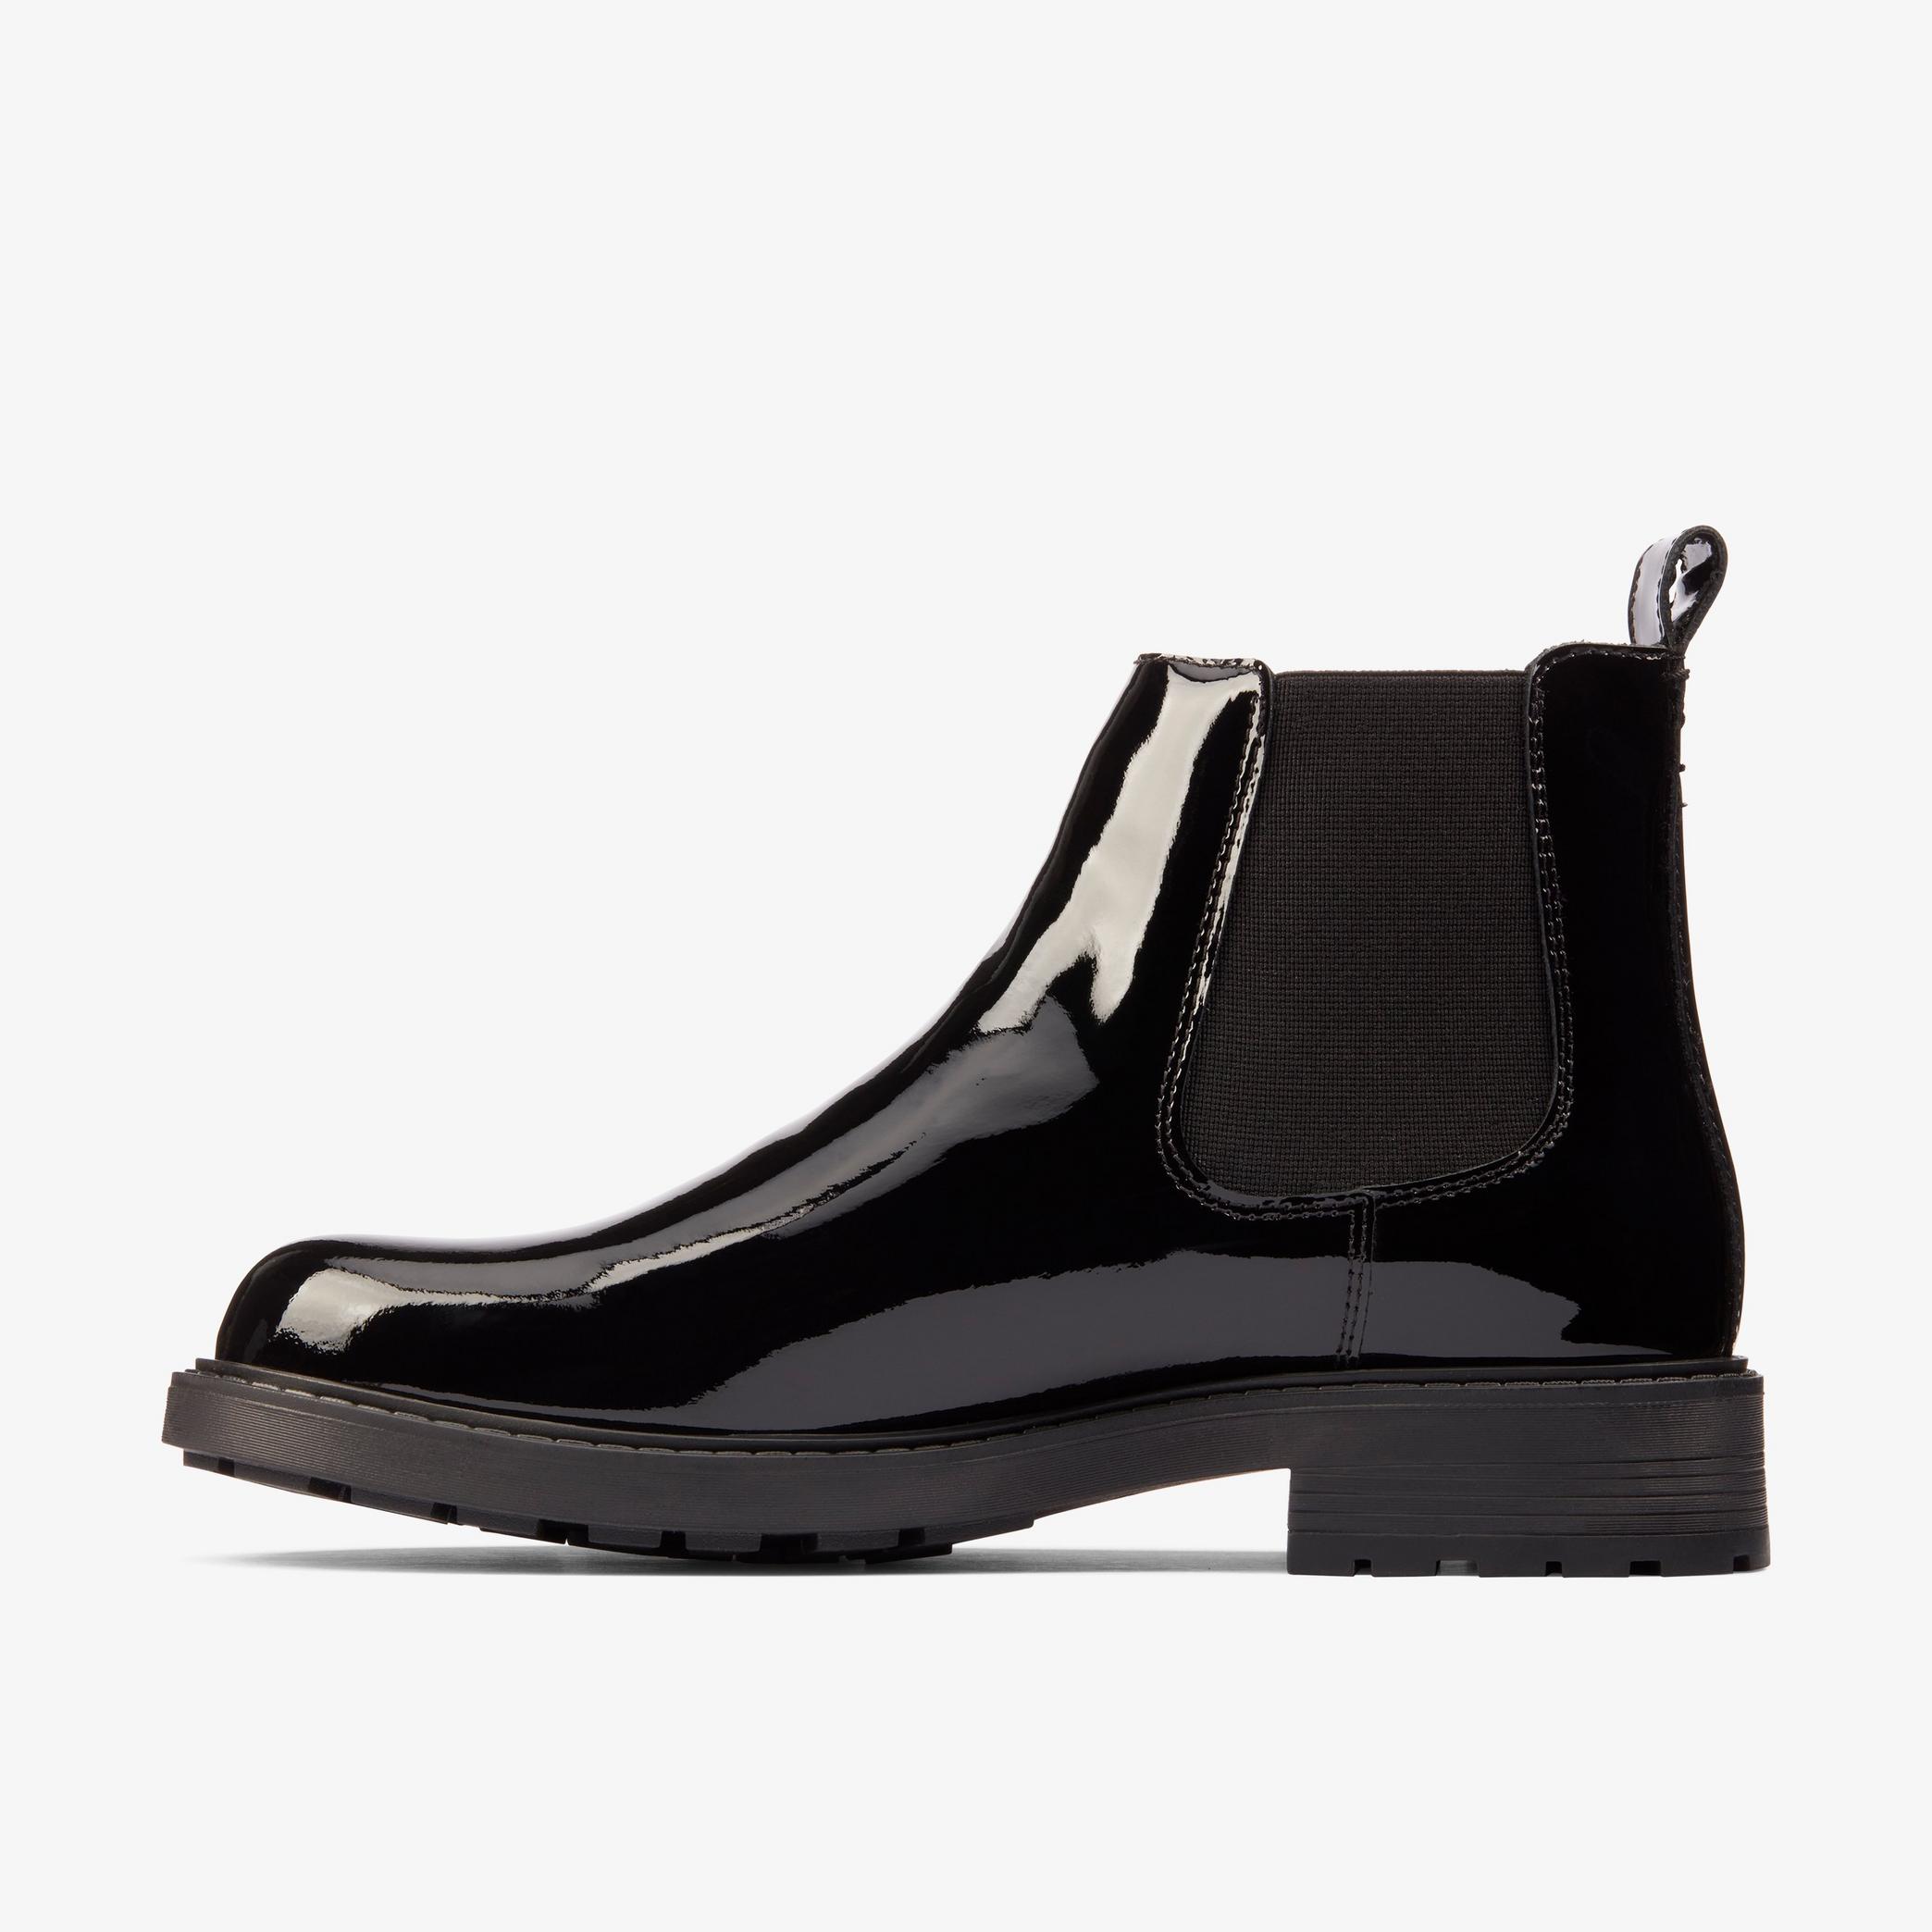 Womens Orinoco 2 Lane Black Patent Ankle Boots | Clarks UK